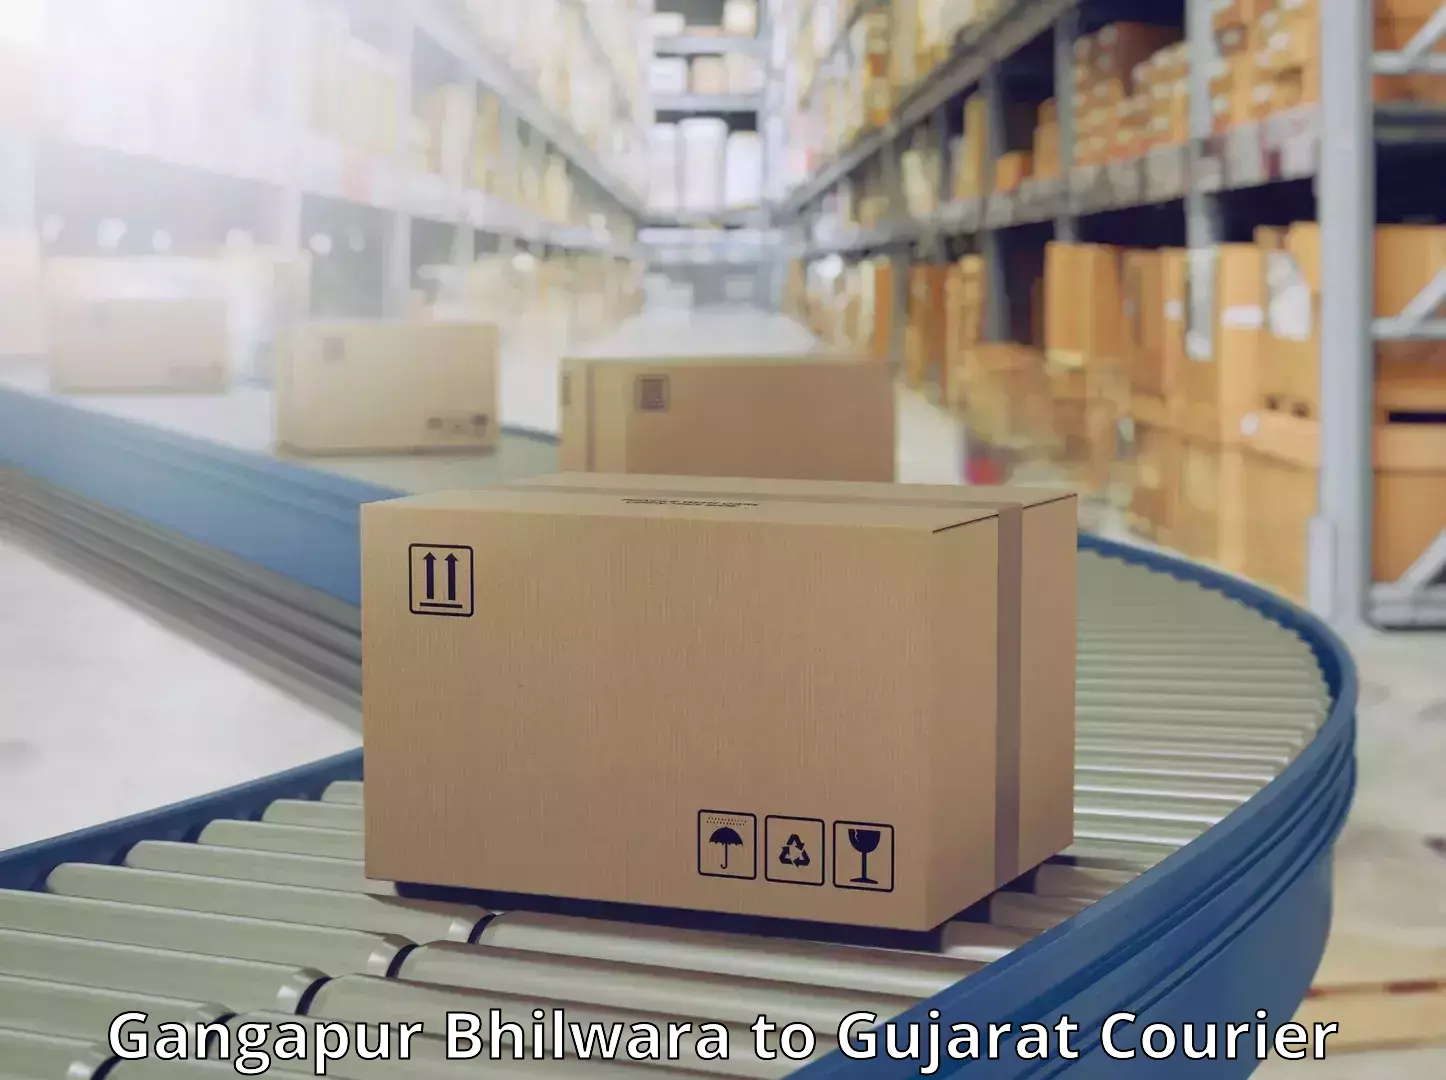 Courier service innovation Gangapur Bhilwara to Ahmedabad